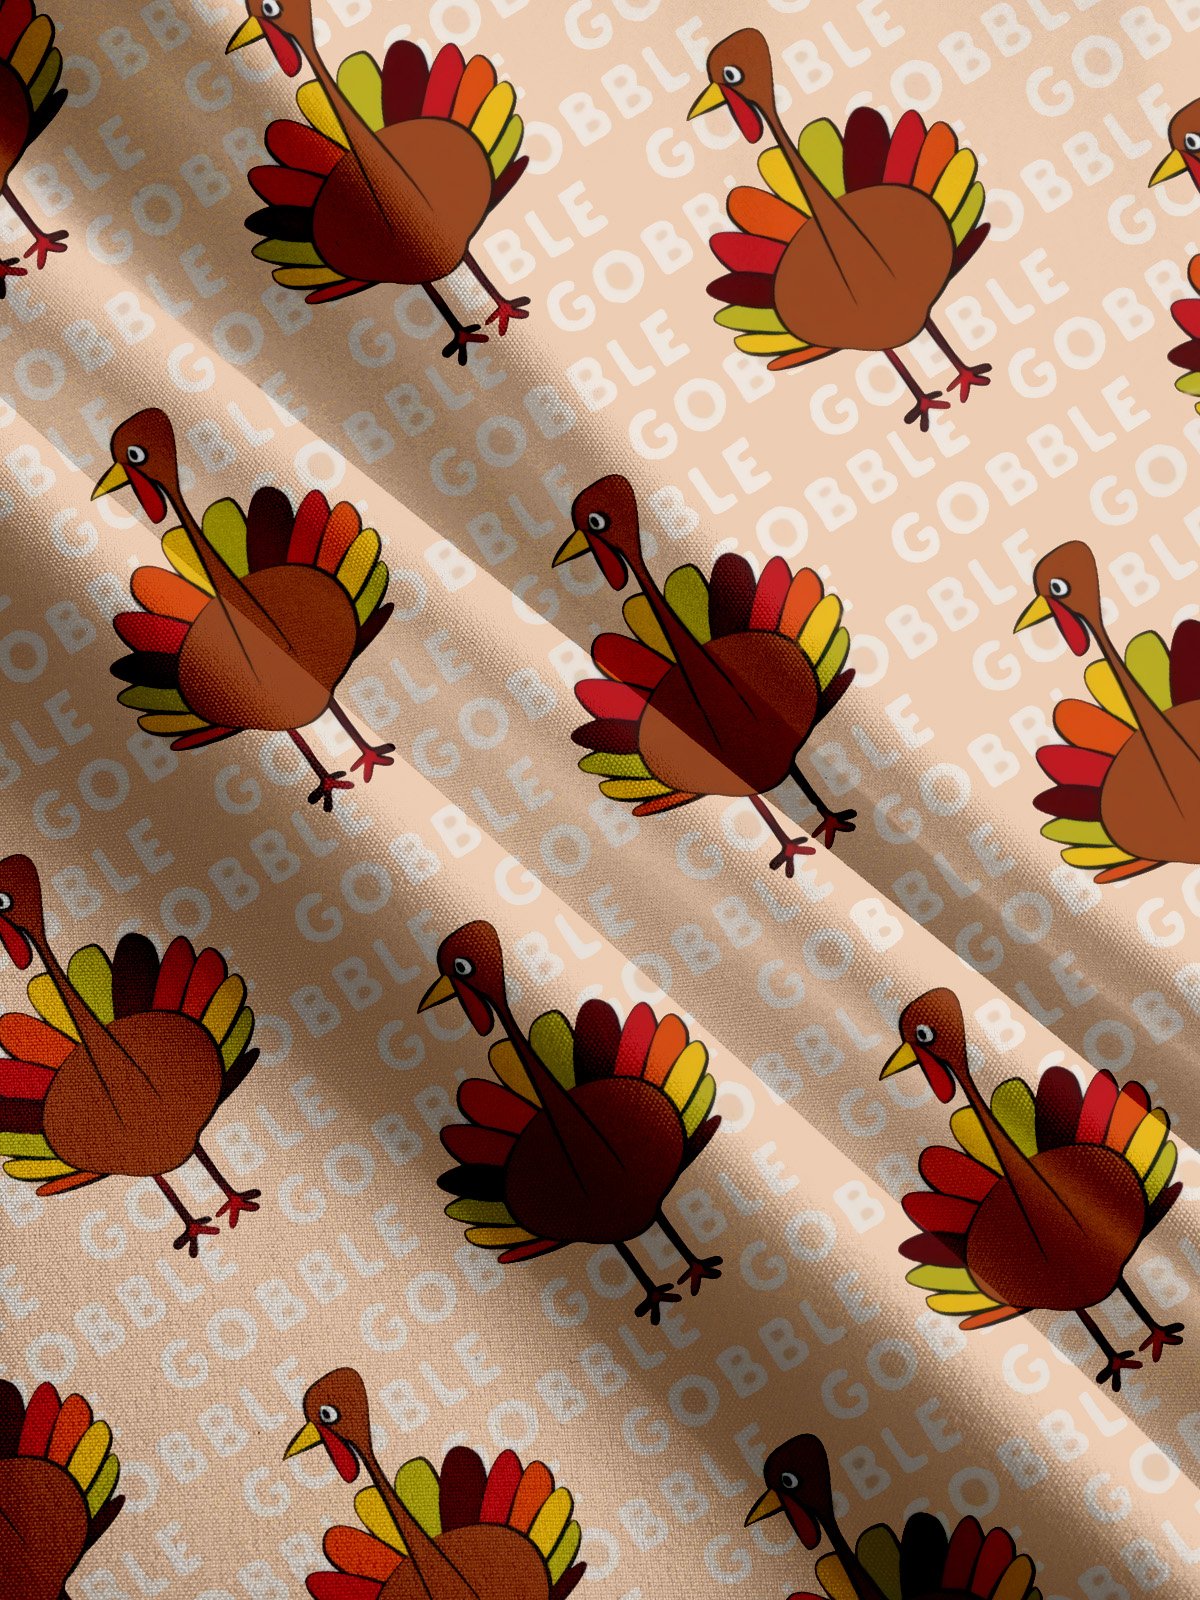 Thanksgiving Turkey Printed Short Sleeve Shirt